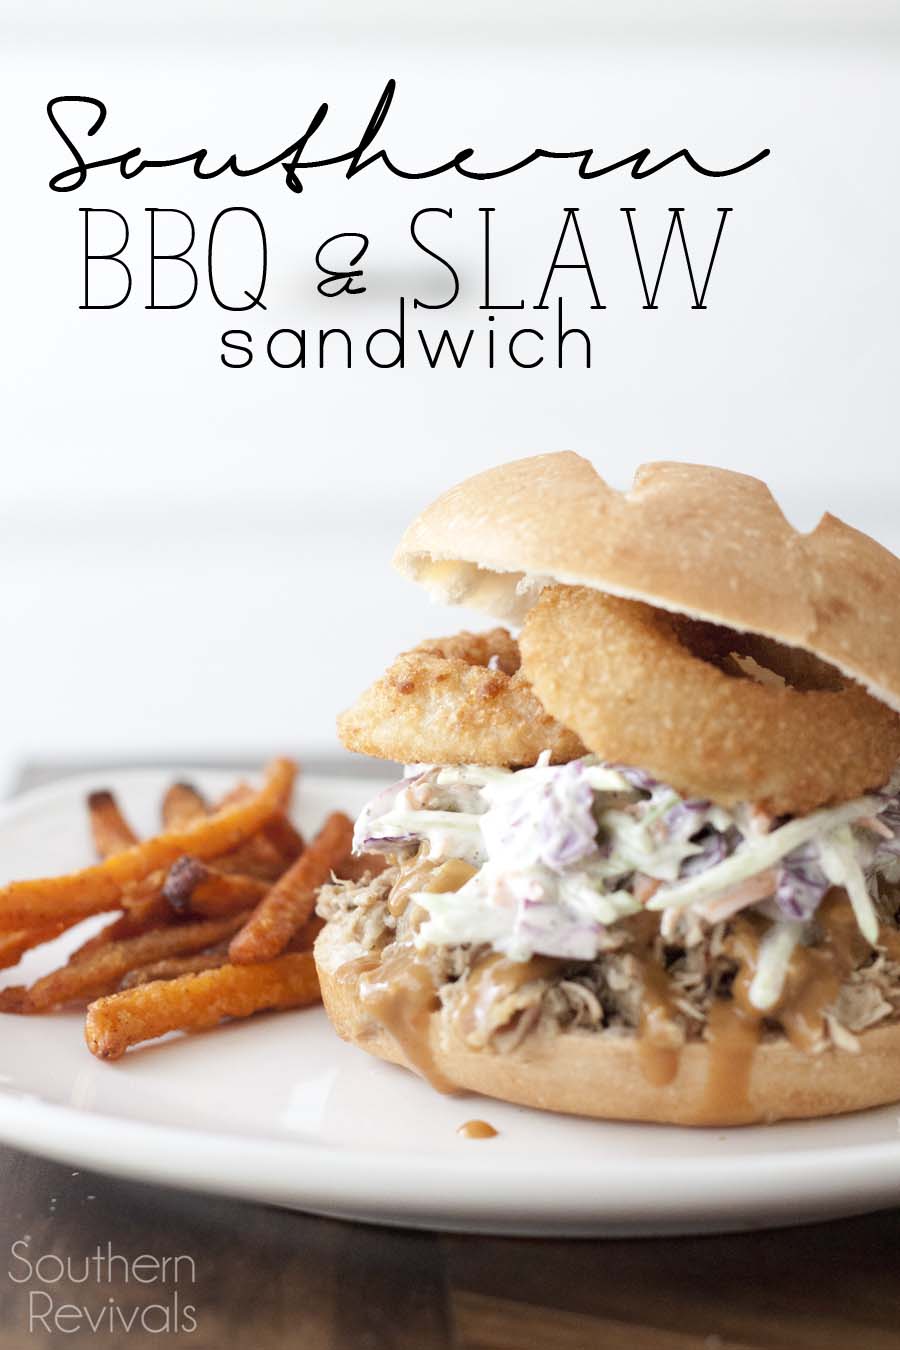 Southern BBQ Slaw Sandwich